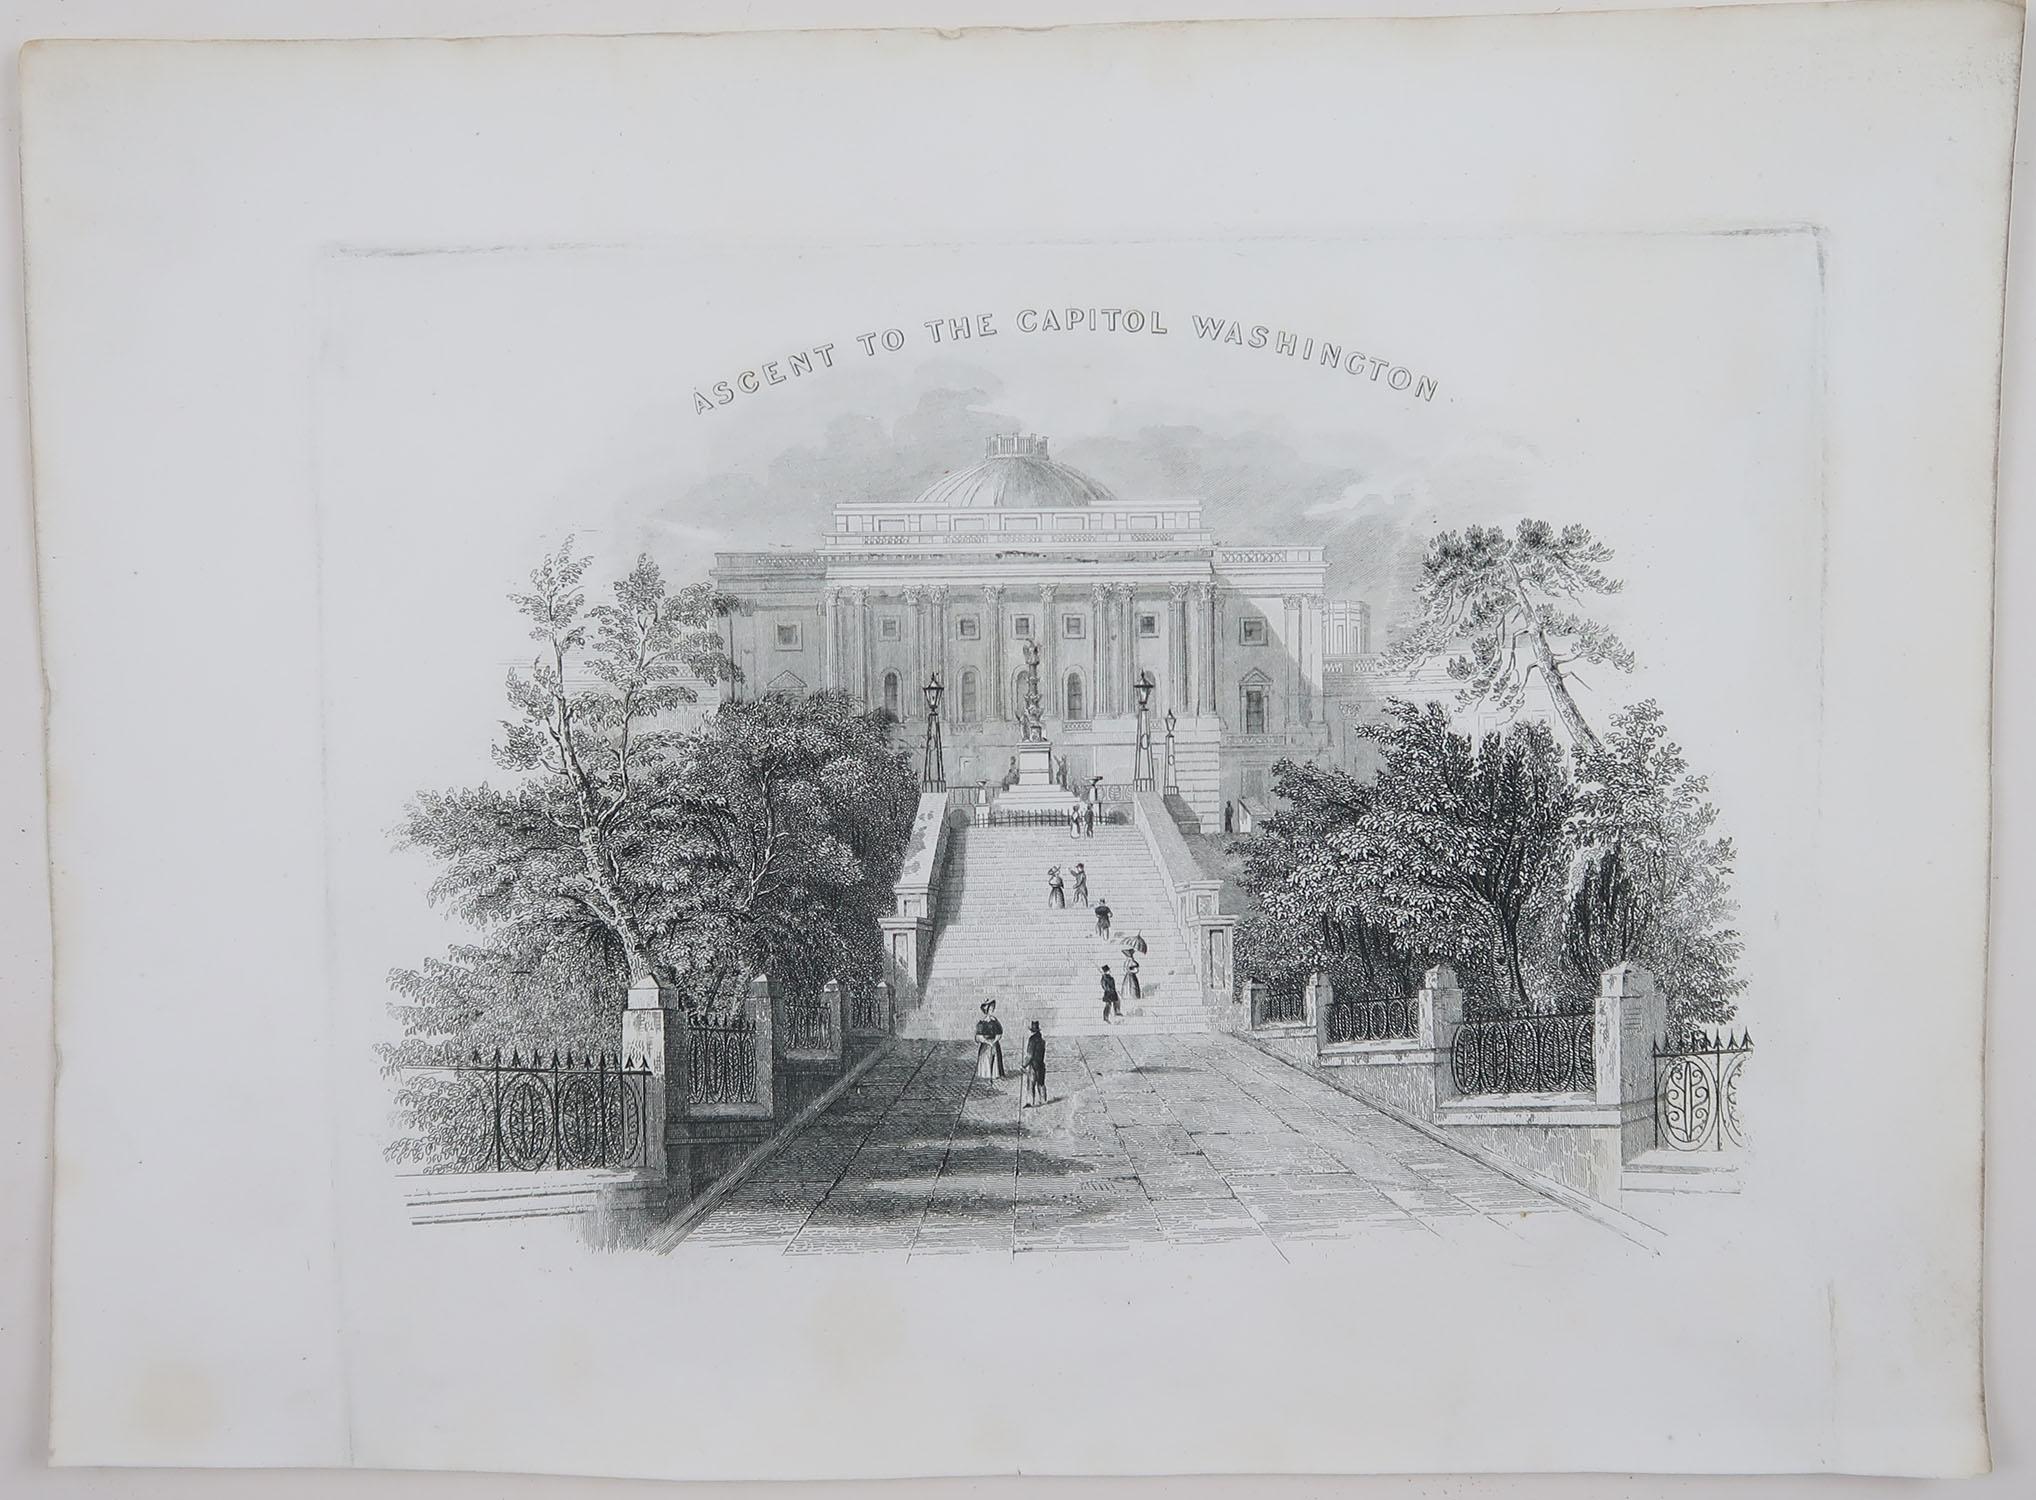 English Original Antique Print of The US Capitol Building, Washington DC., 1827